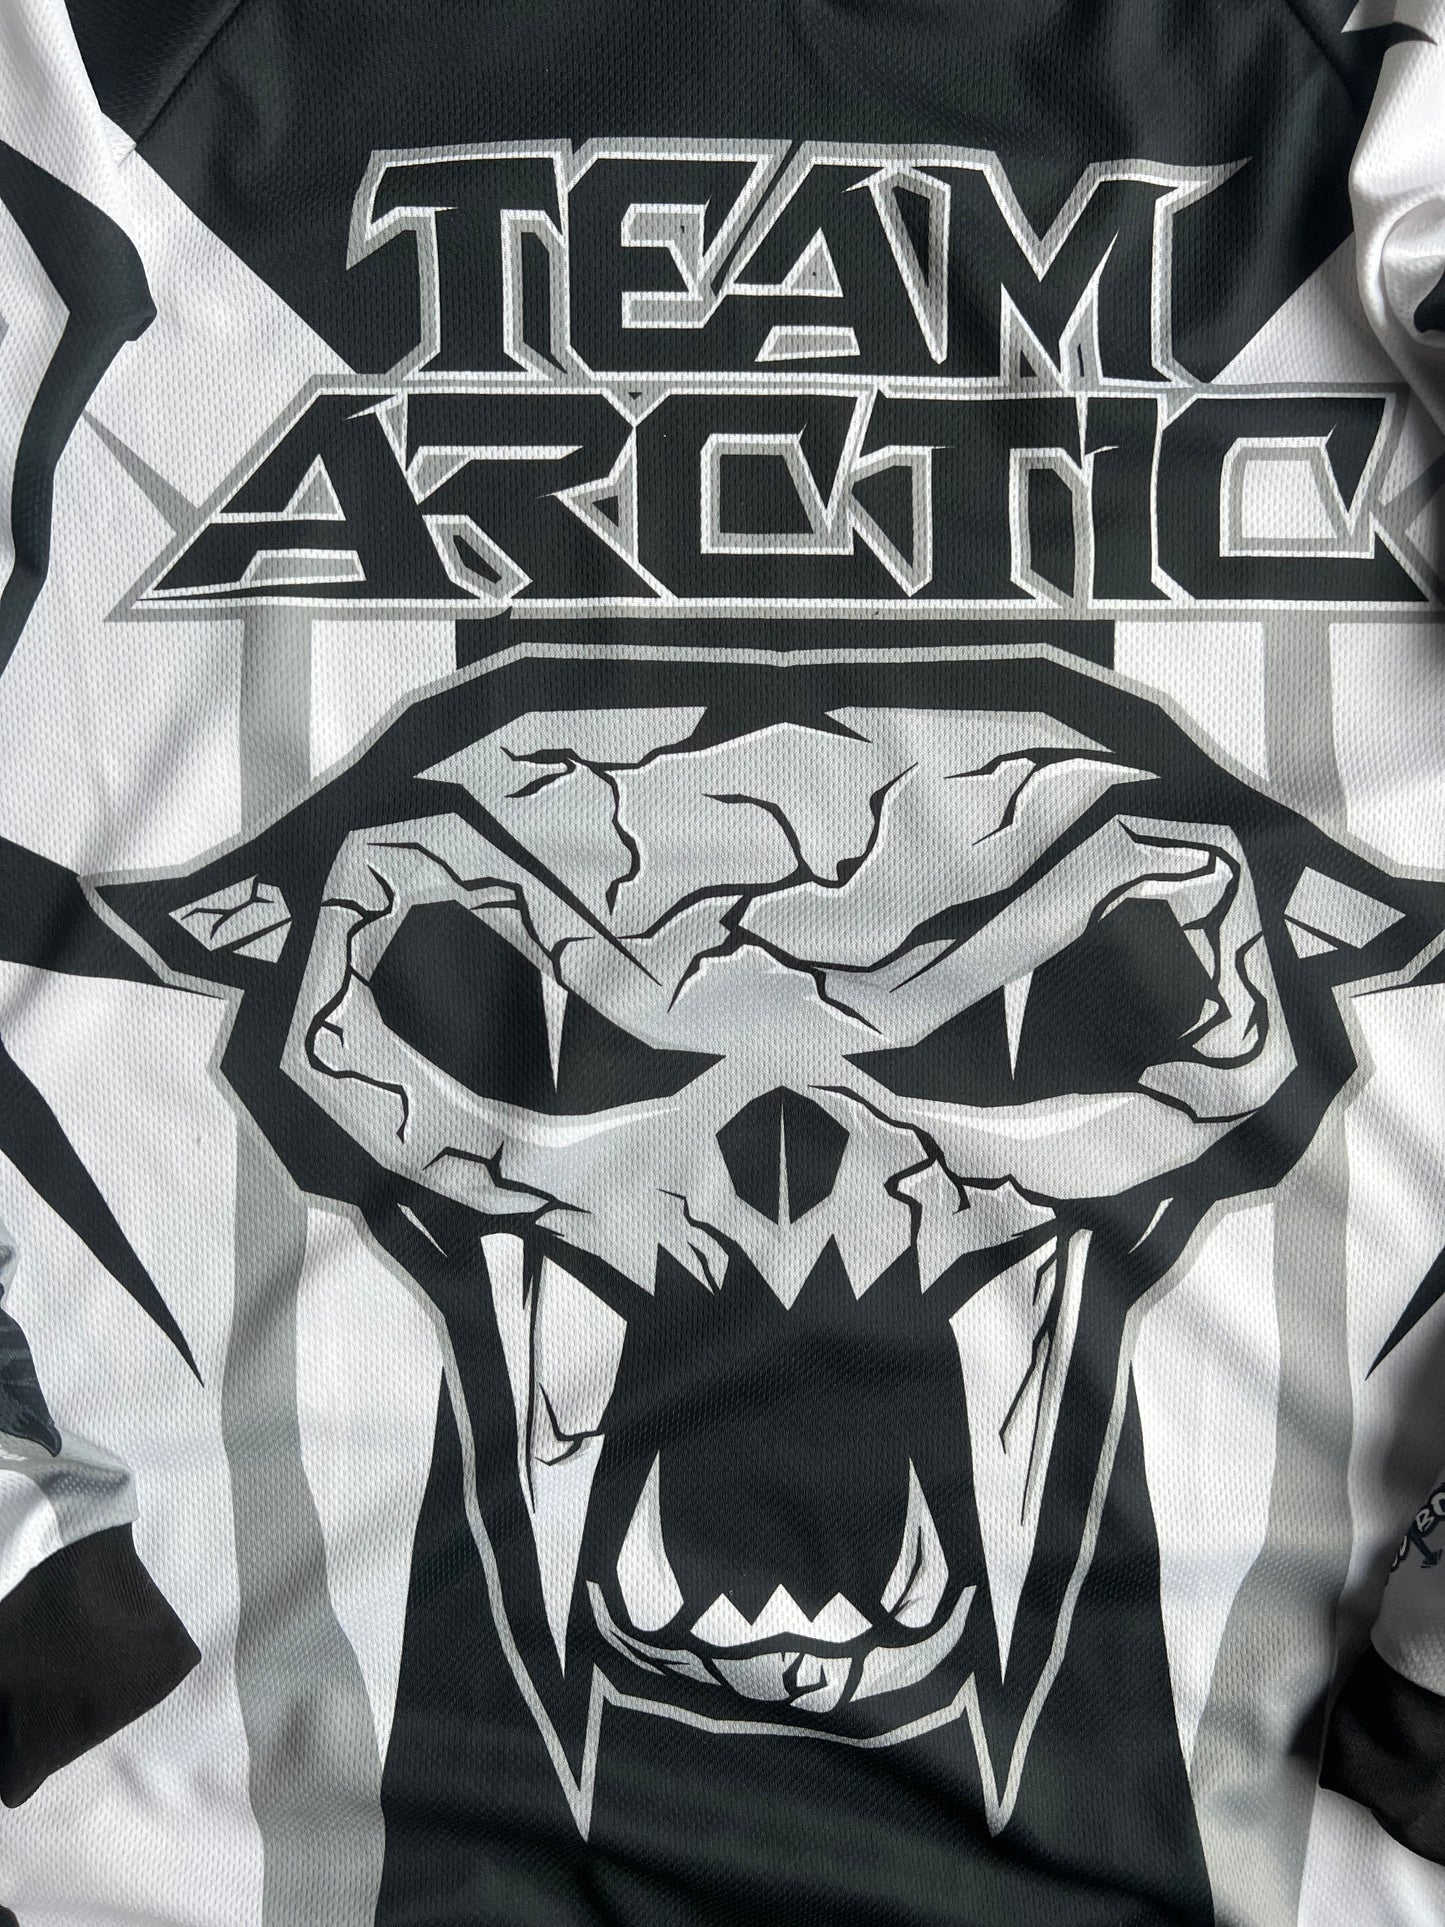 Vintage Team Arctic Shirt - S